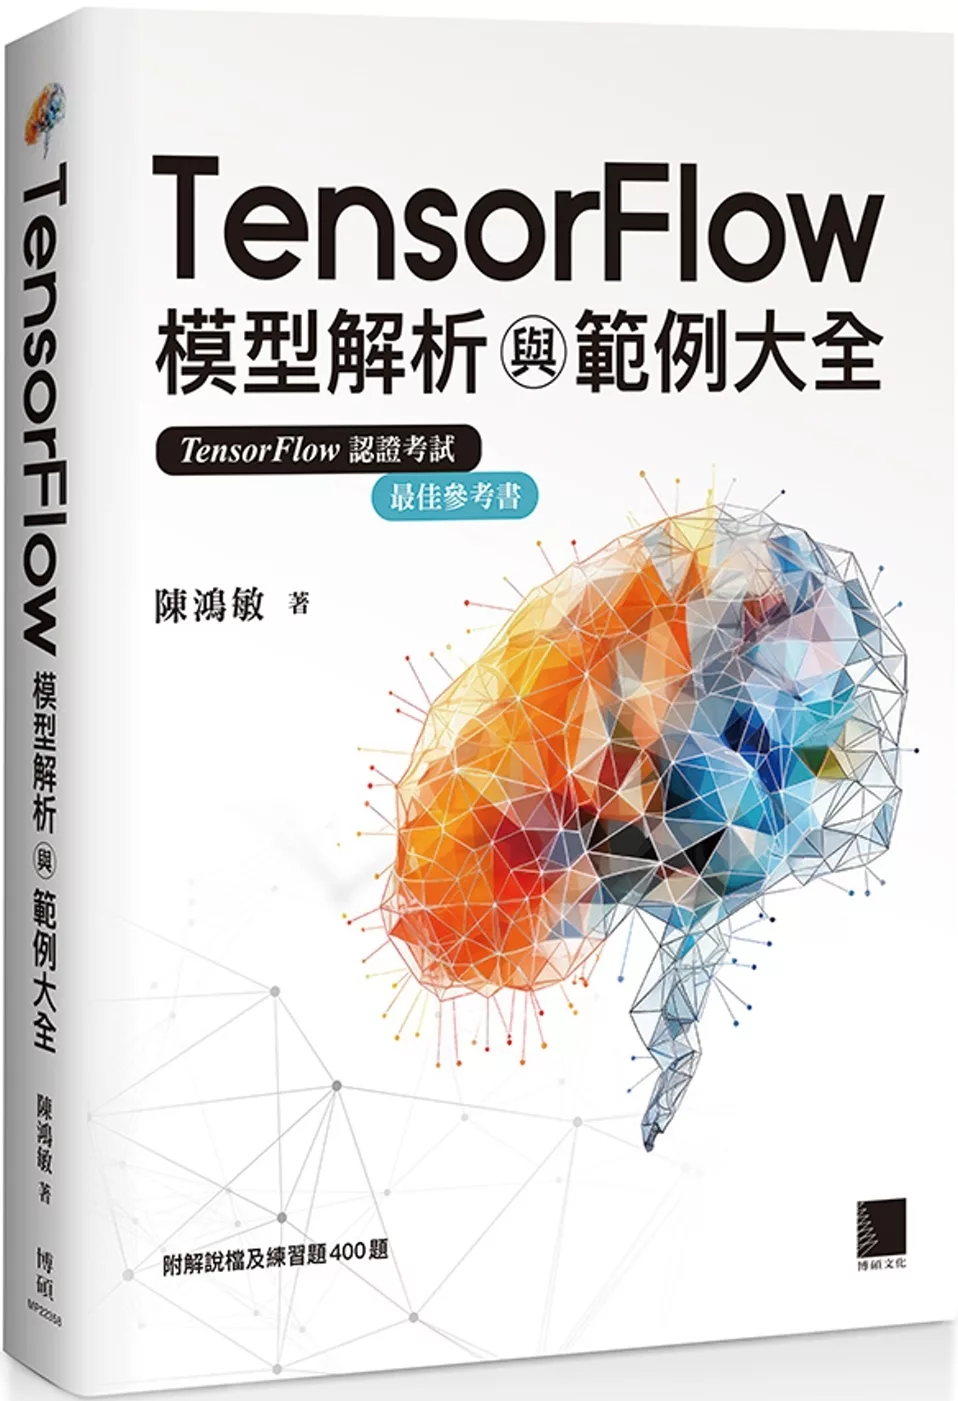 TensorFlow模型解析與範例大全